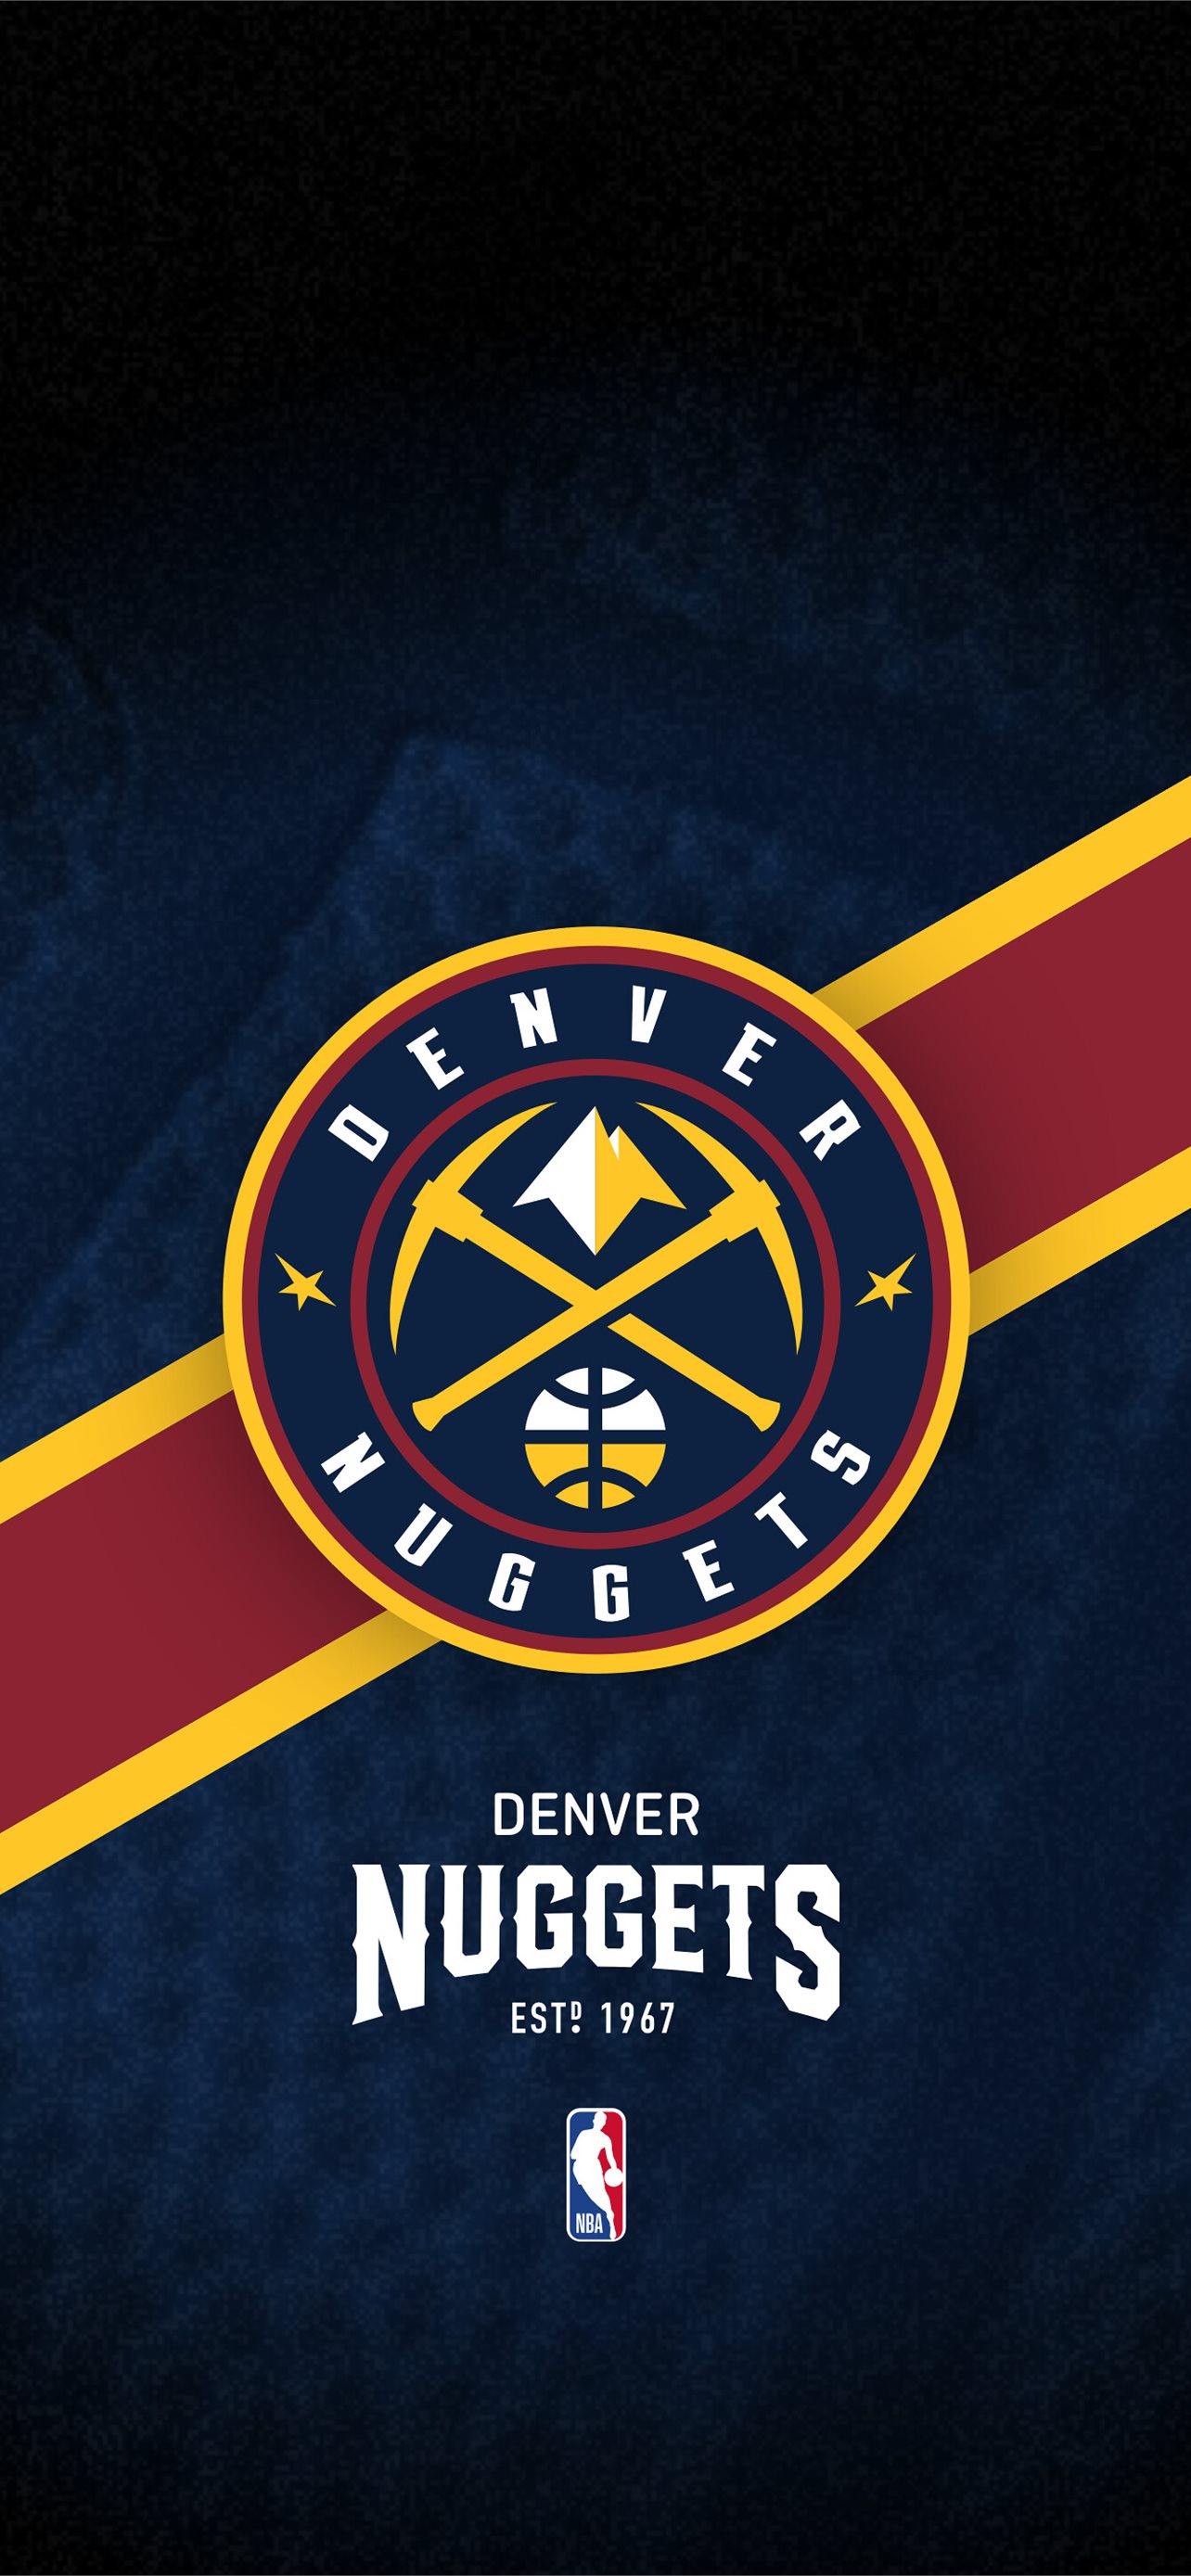 100+] Denver Nuggets Wallpapers